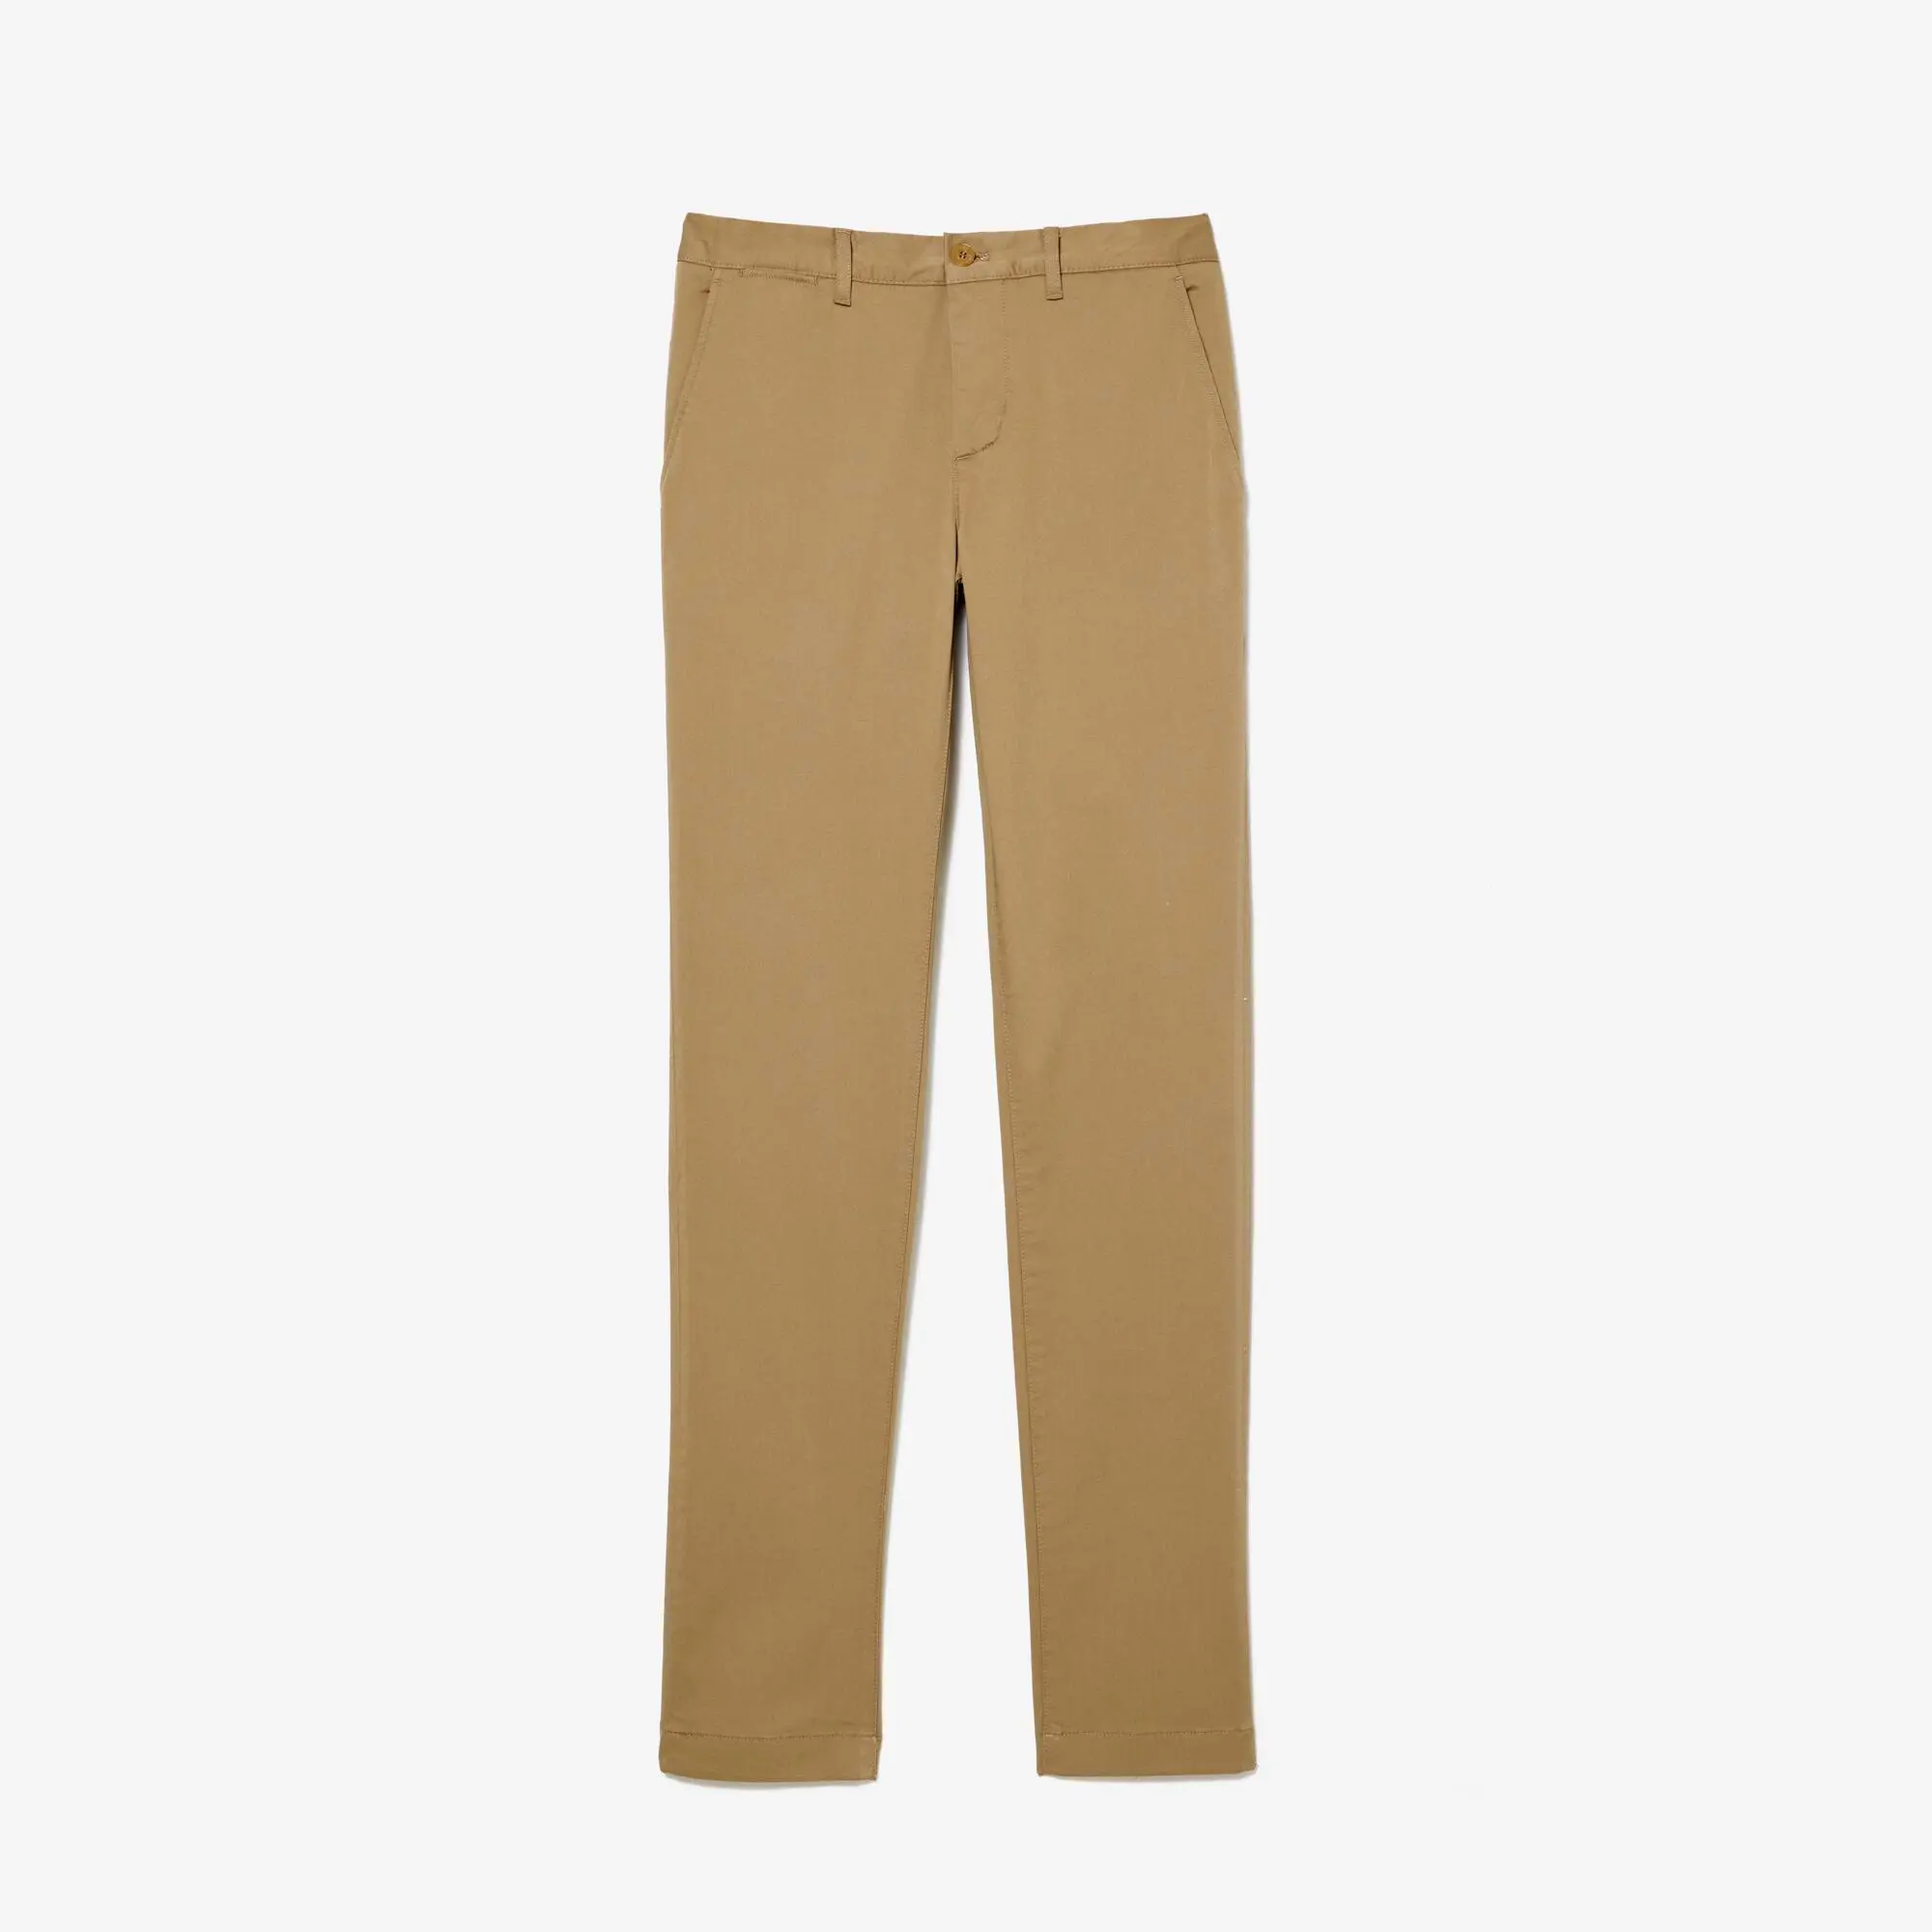 Lacoste Men's New Classic Slim Fit Stretch Cotton Trousers. 2